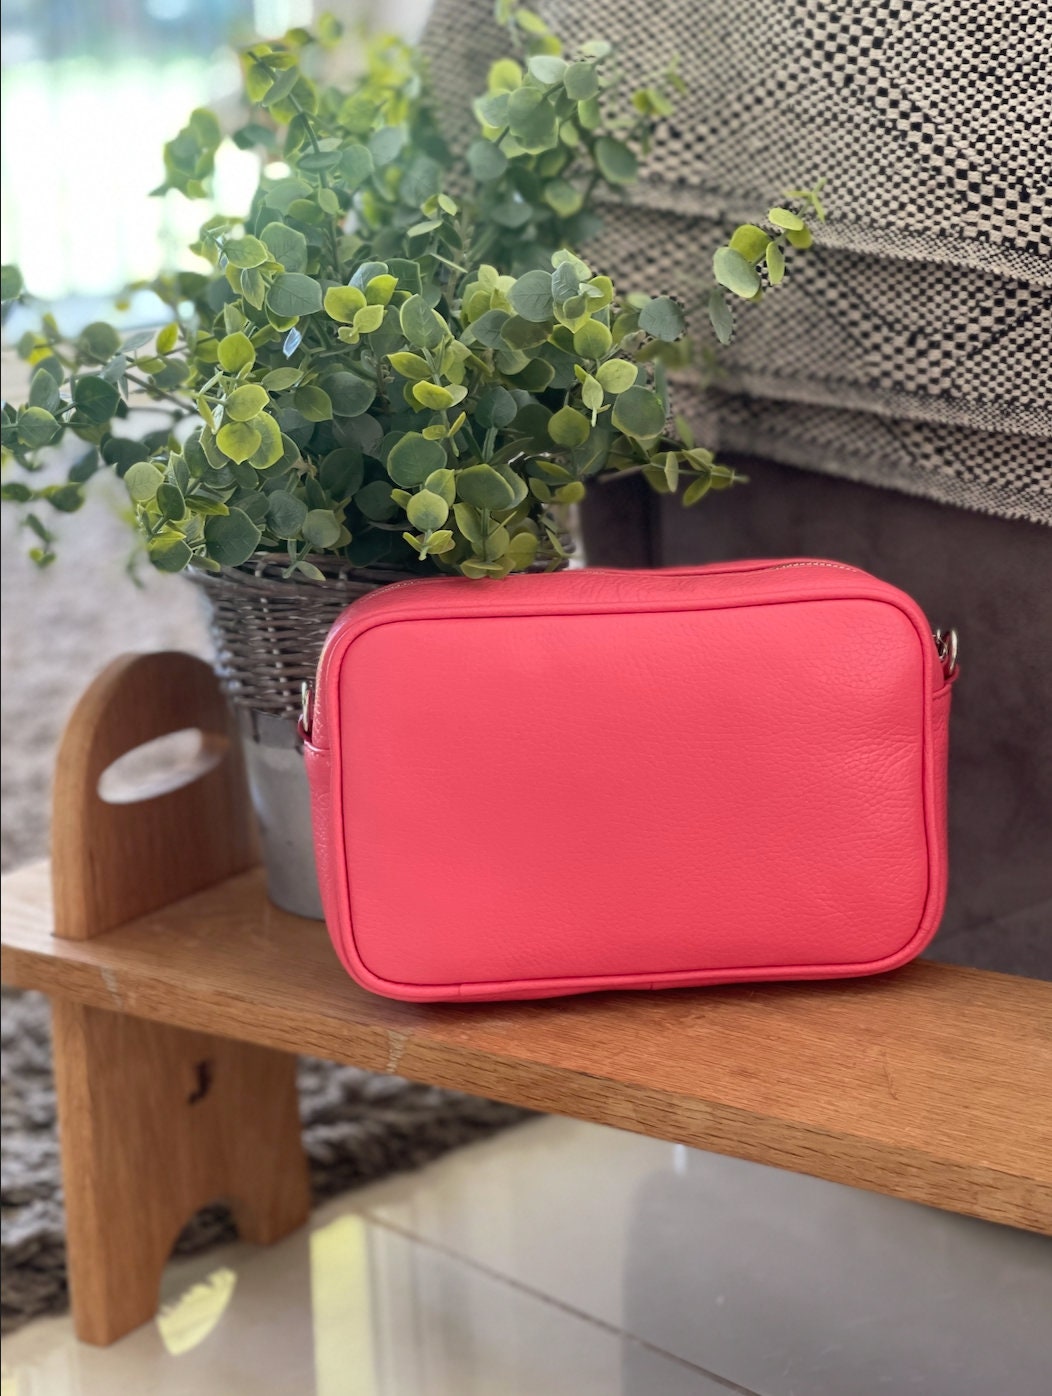 Made in Italy Coral Pink Side Tassel Leather Camera Bag Crossbody Bag Handbag Crossbody Strap